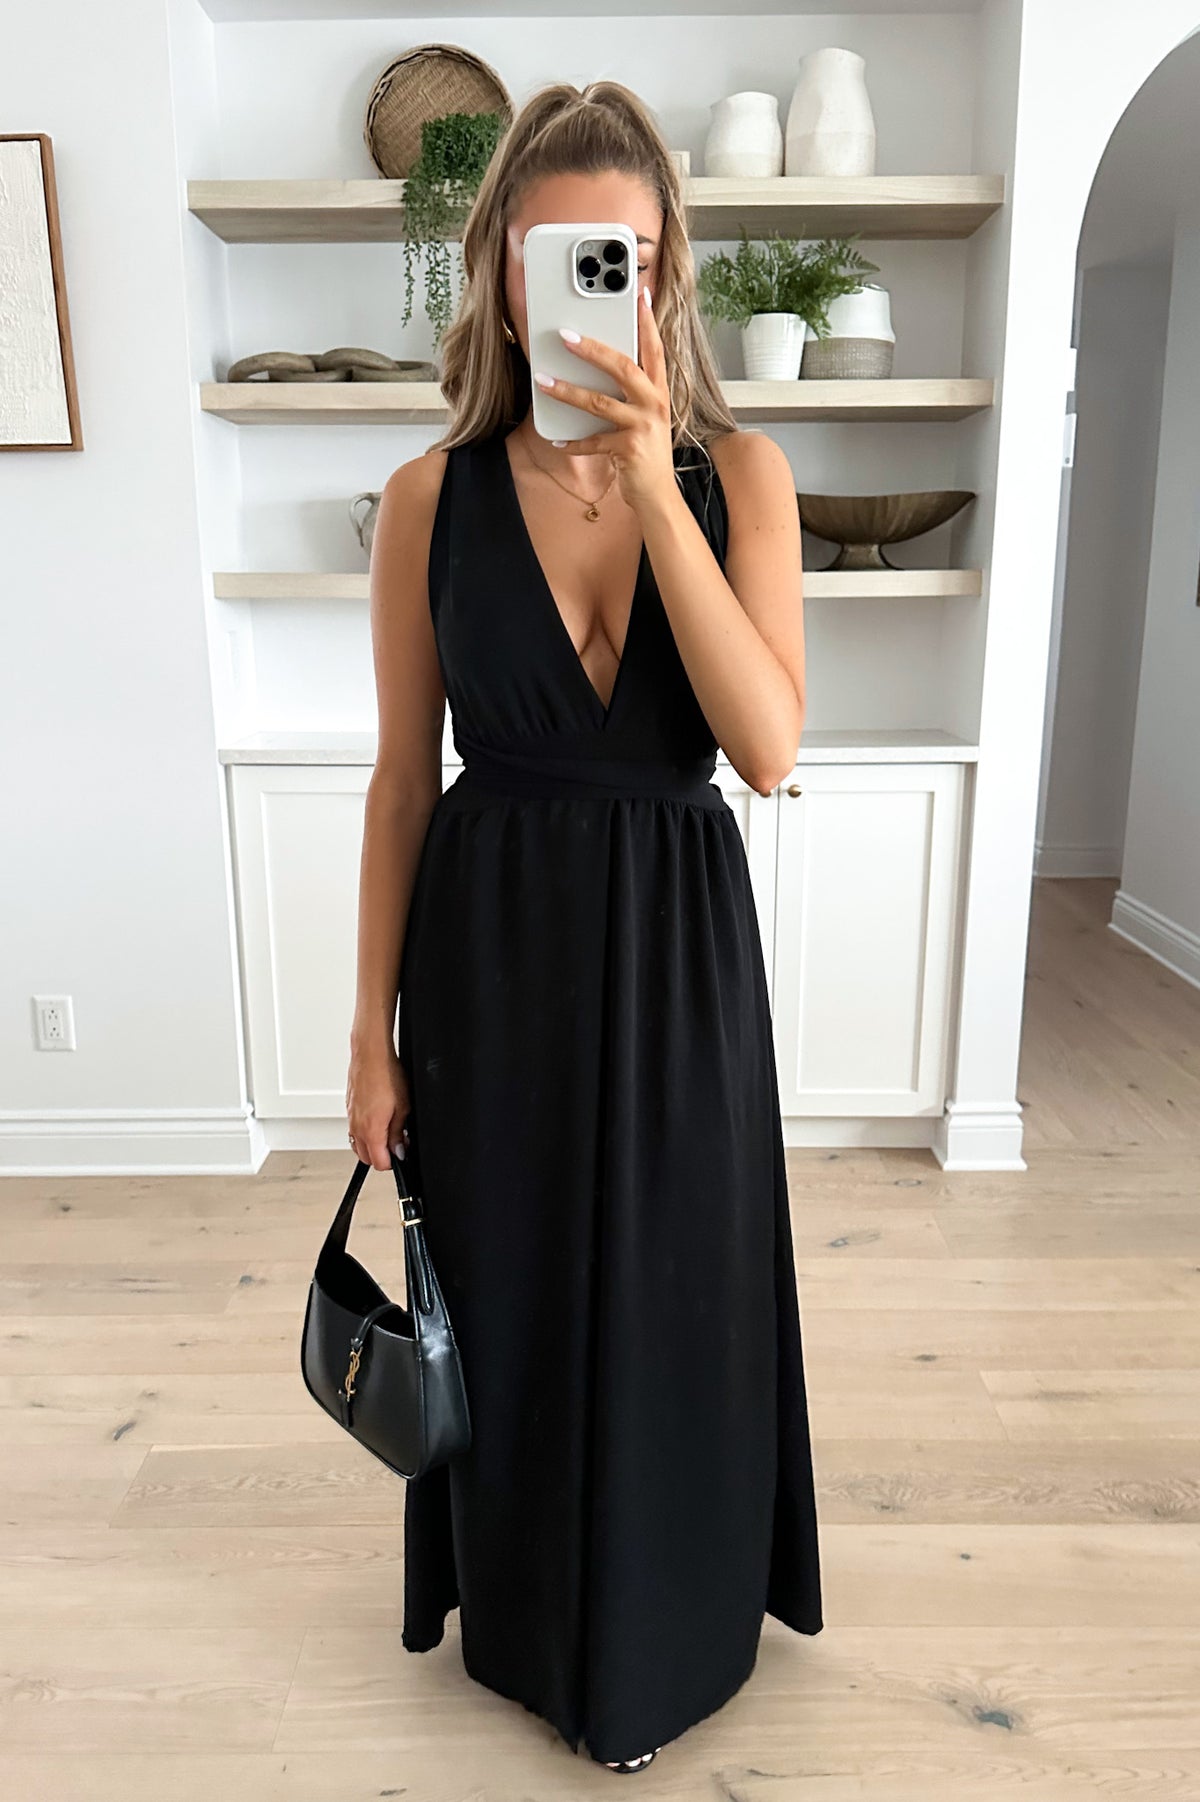 SHAYLA - Black Dress